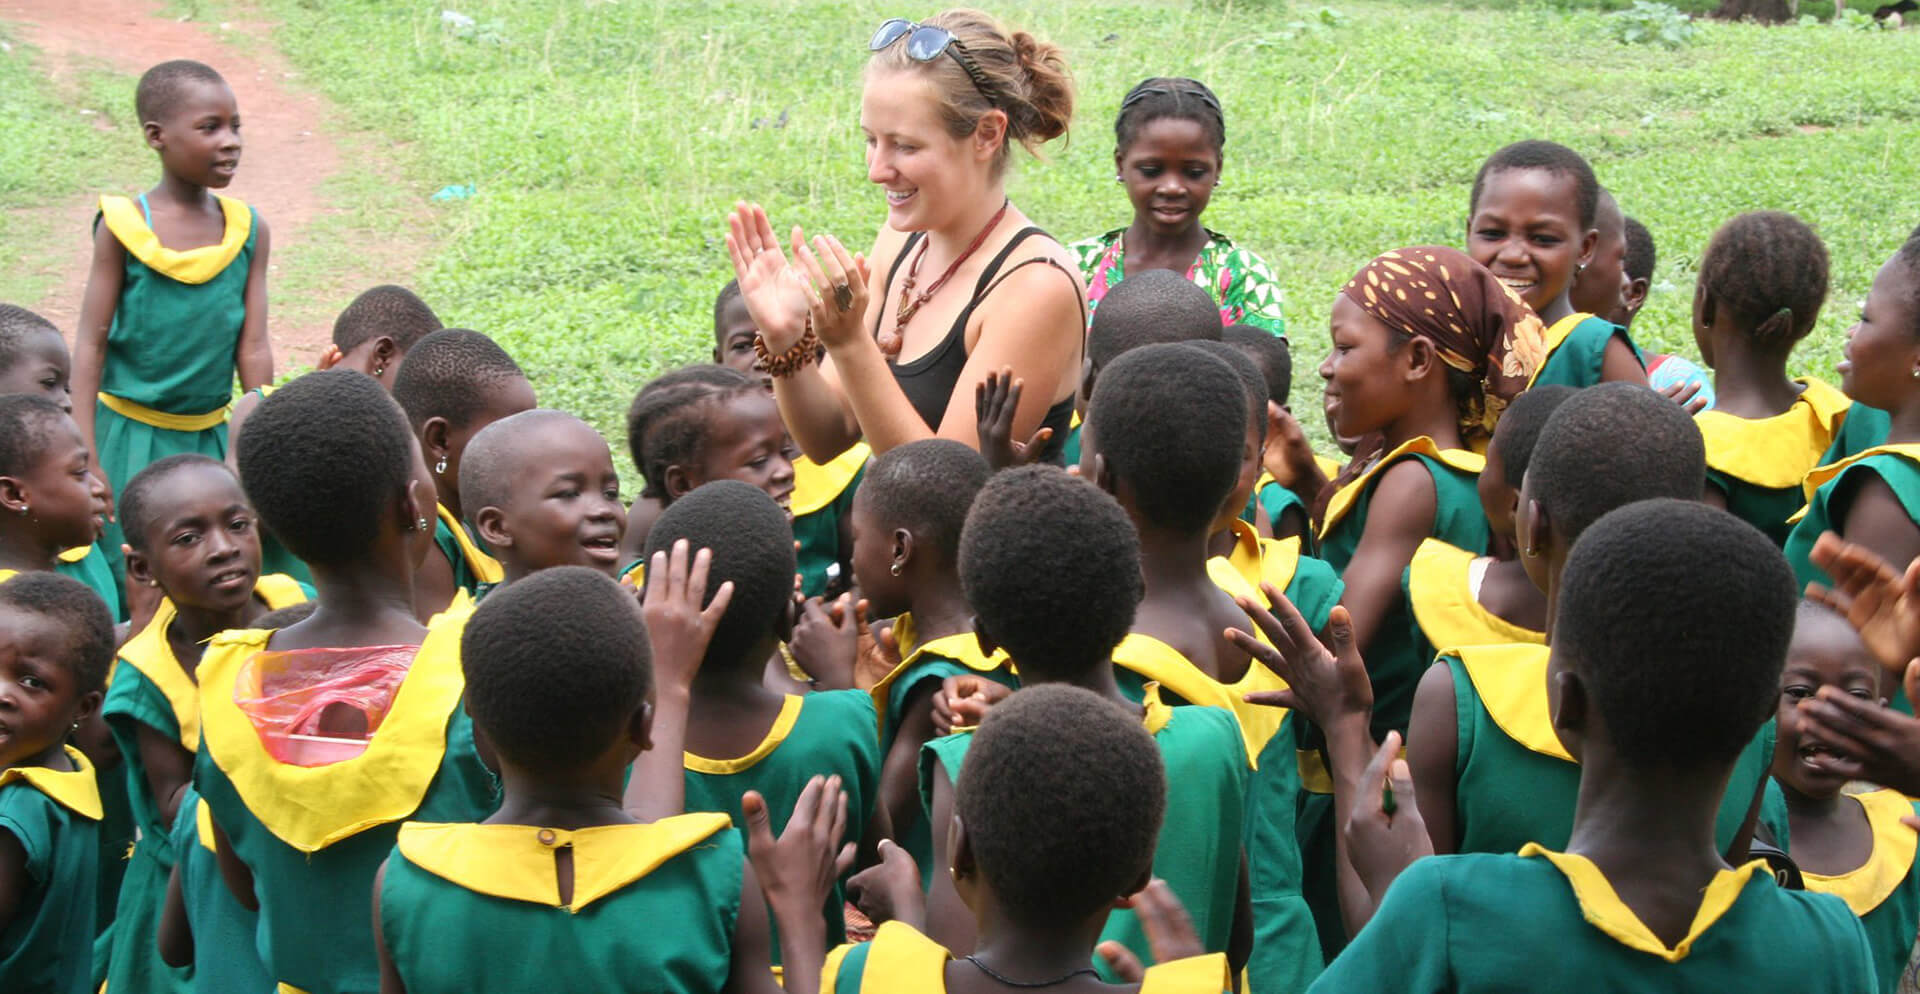 Meet Claire Moynihan, Volunteer in Tanzania